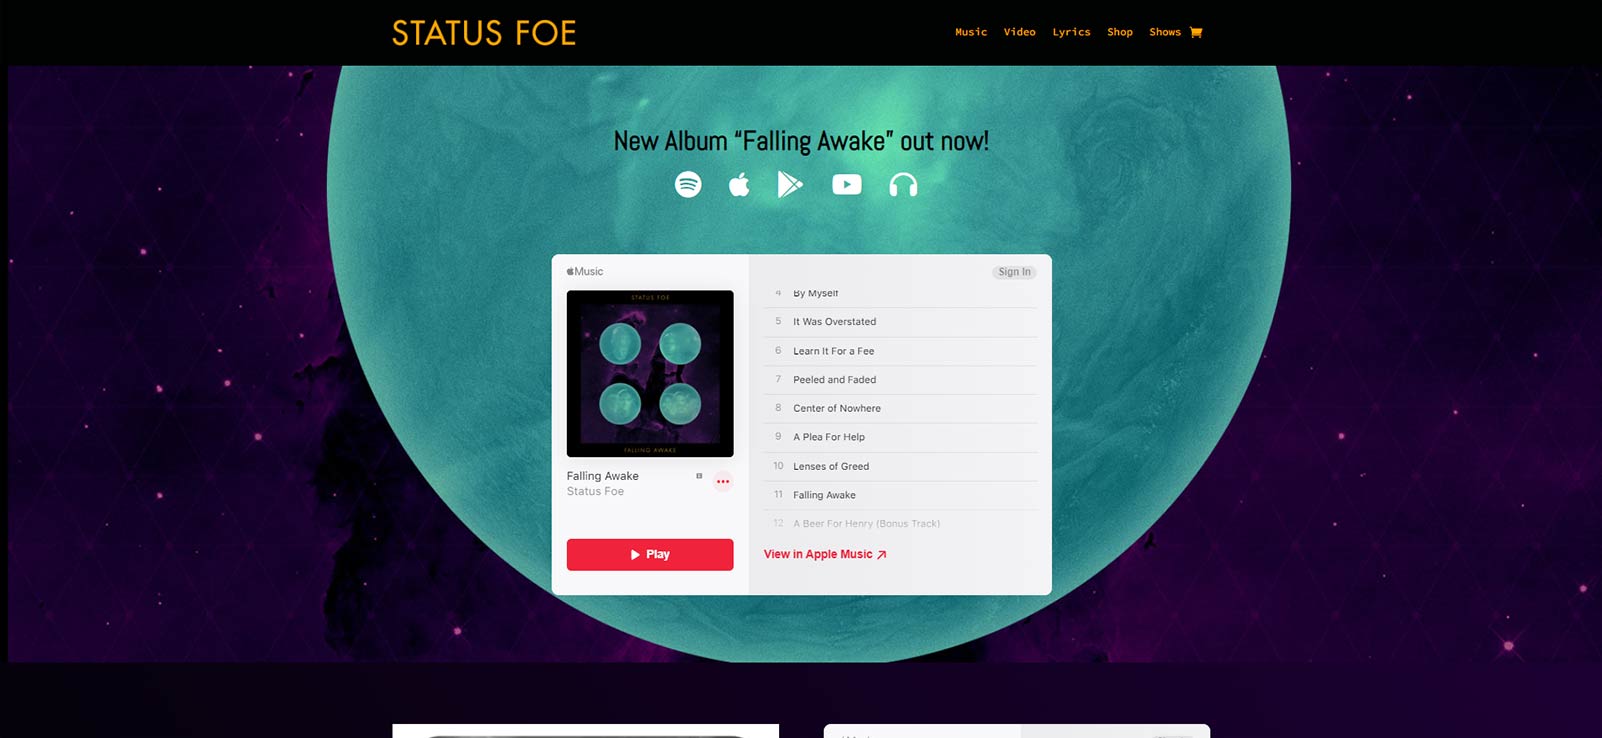 Screen Capture image of the Status Foe website.